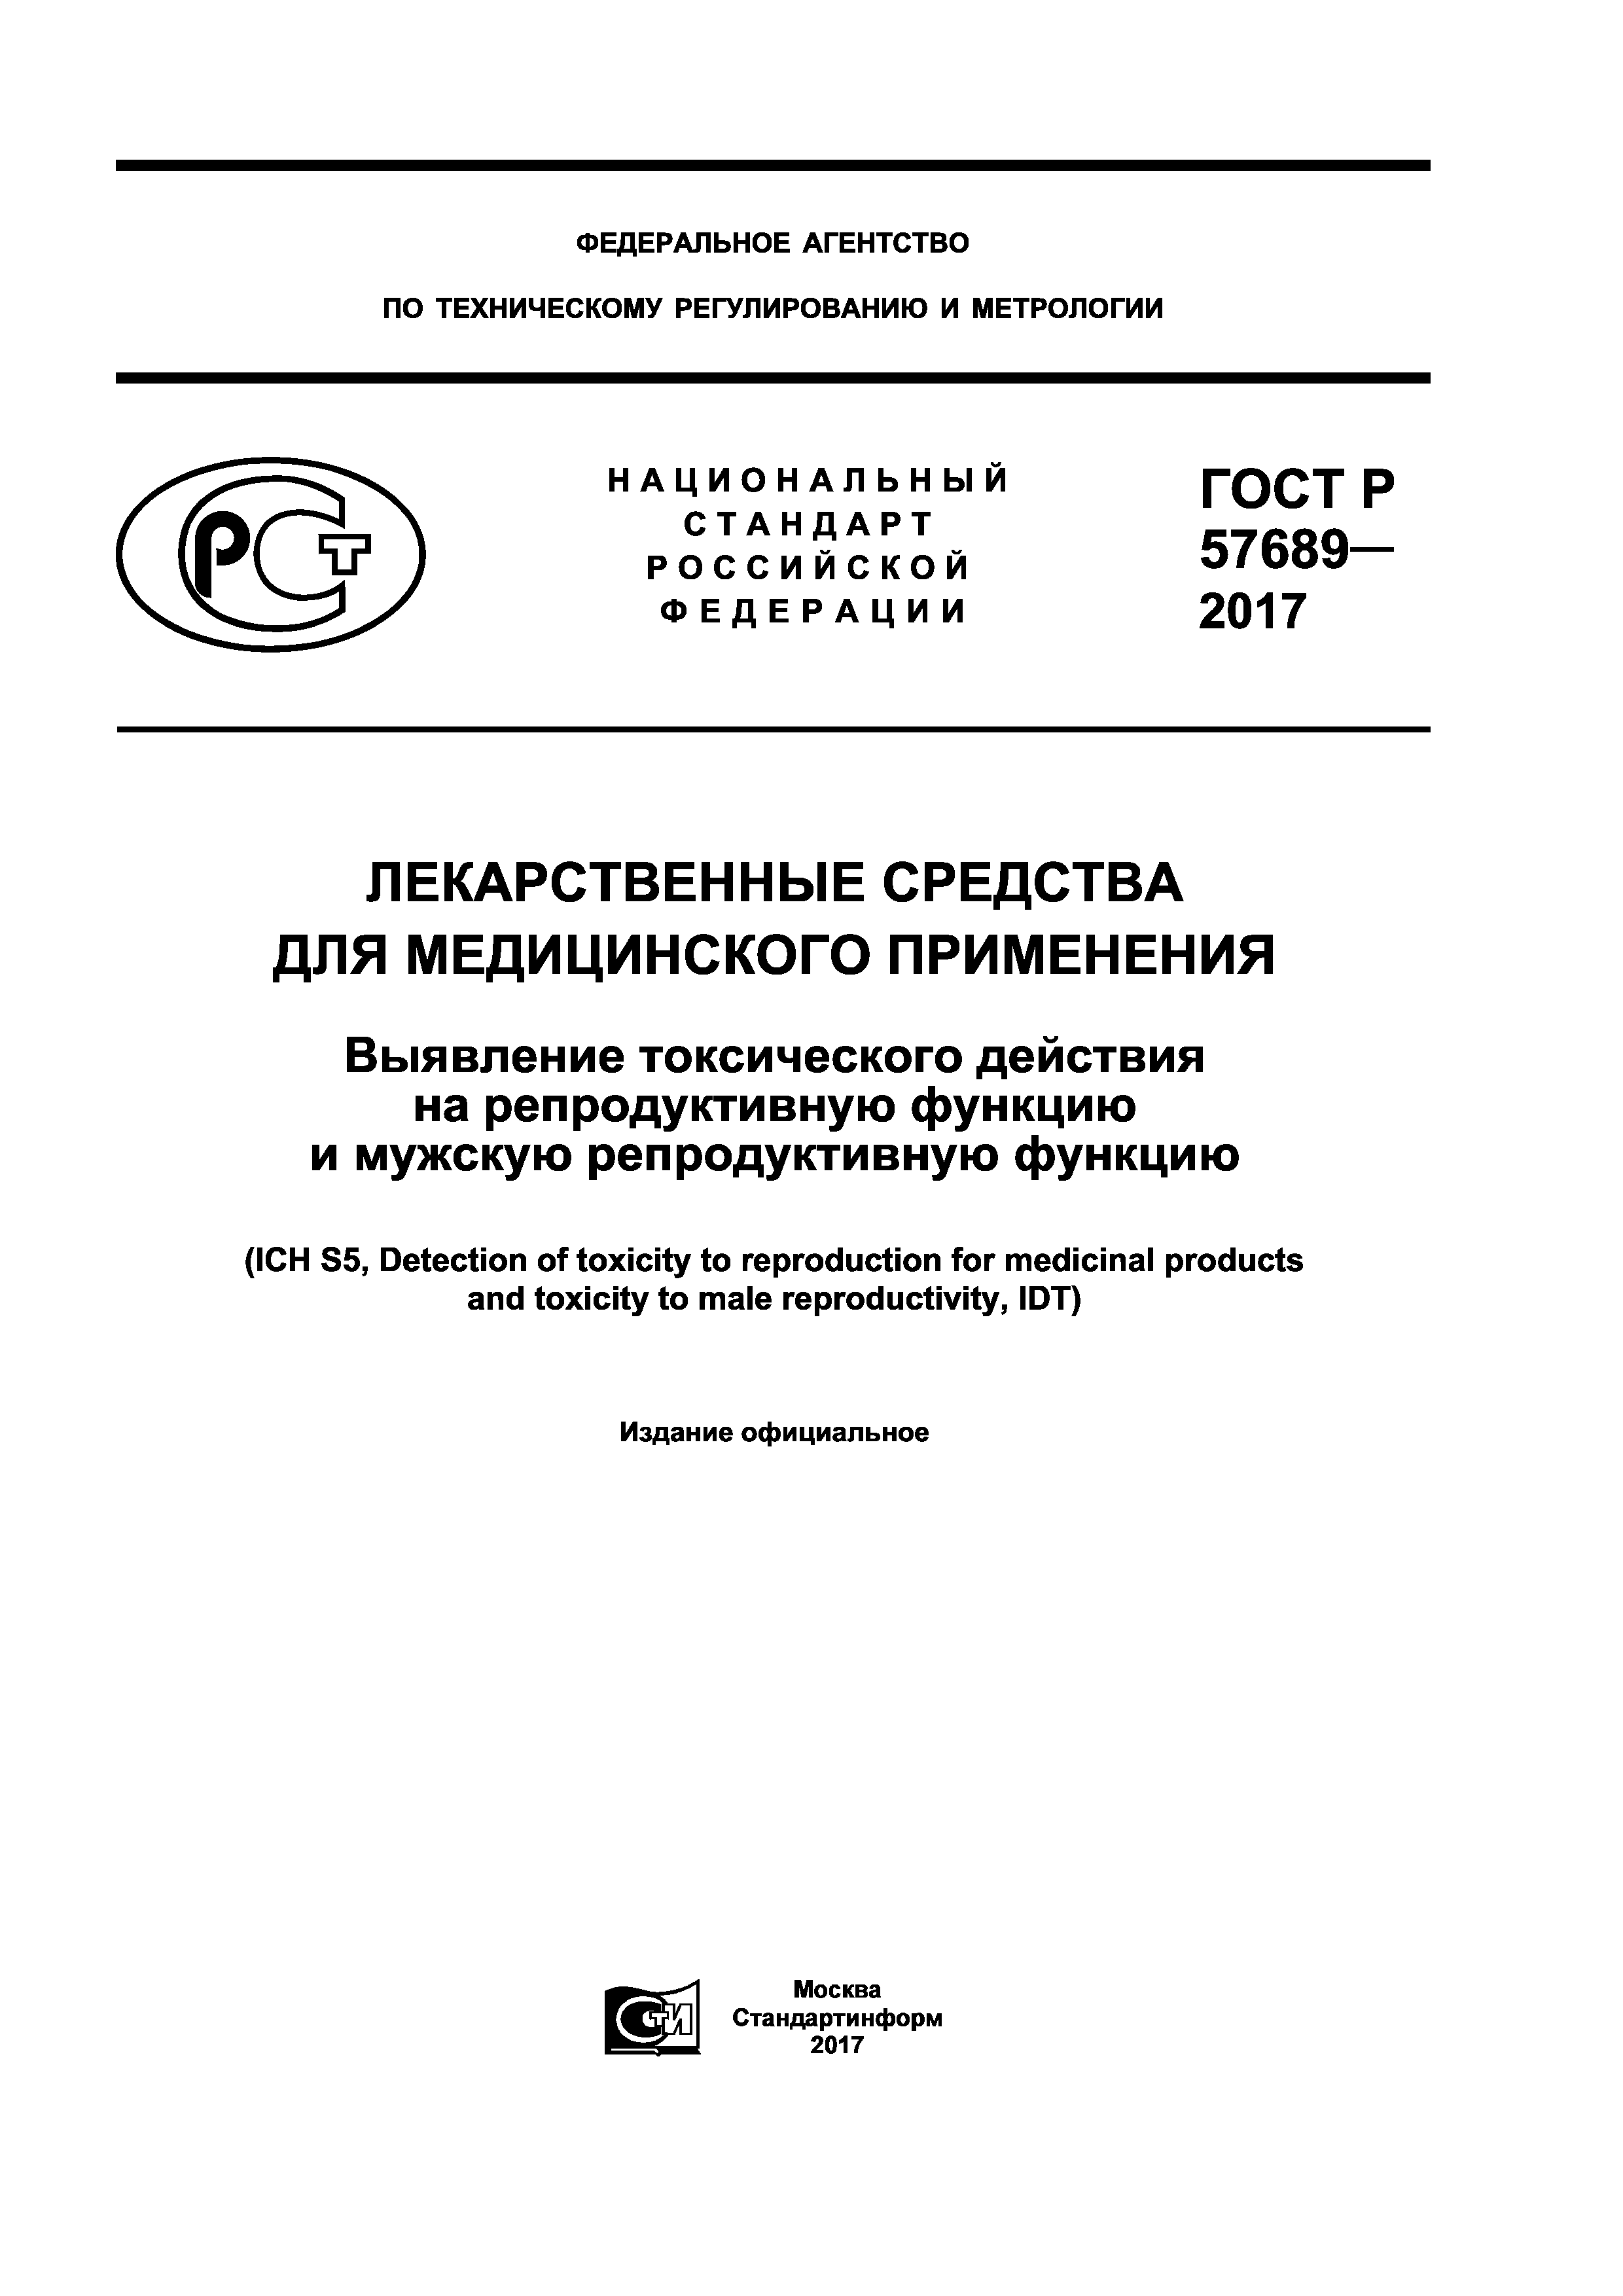 ГОСТ Р 57689-2017